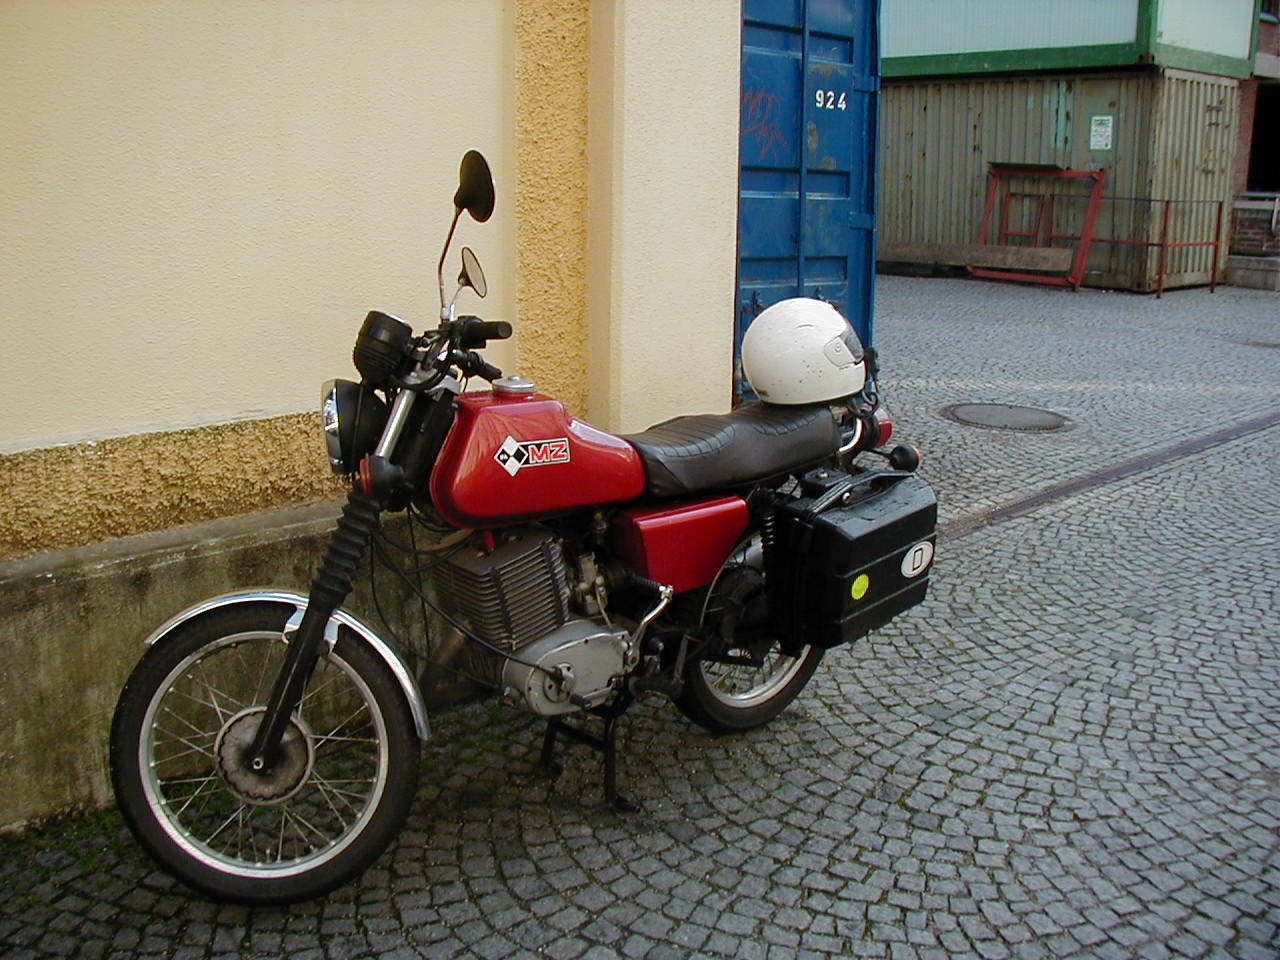 24-2_stroke_motorcycle-munchen(munich).jpg